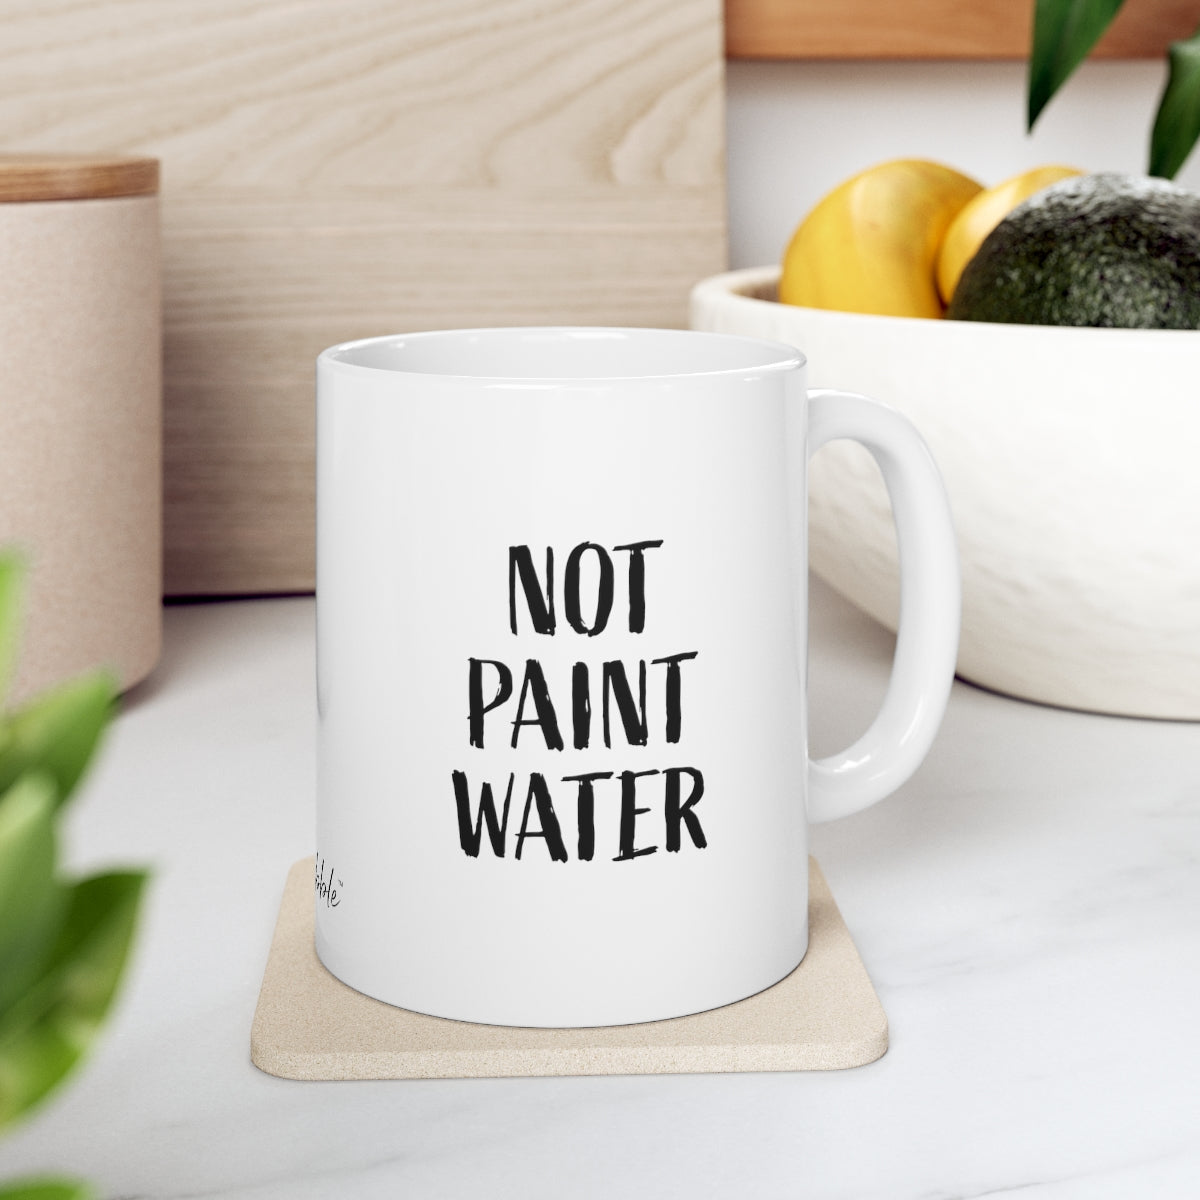 Not Paint Water Ceramic Mug 11oz